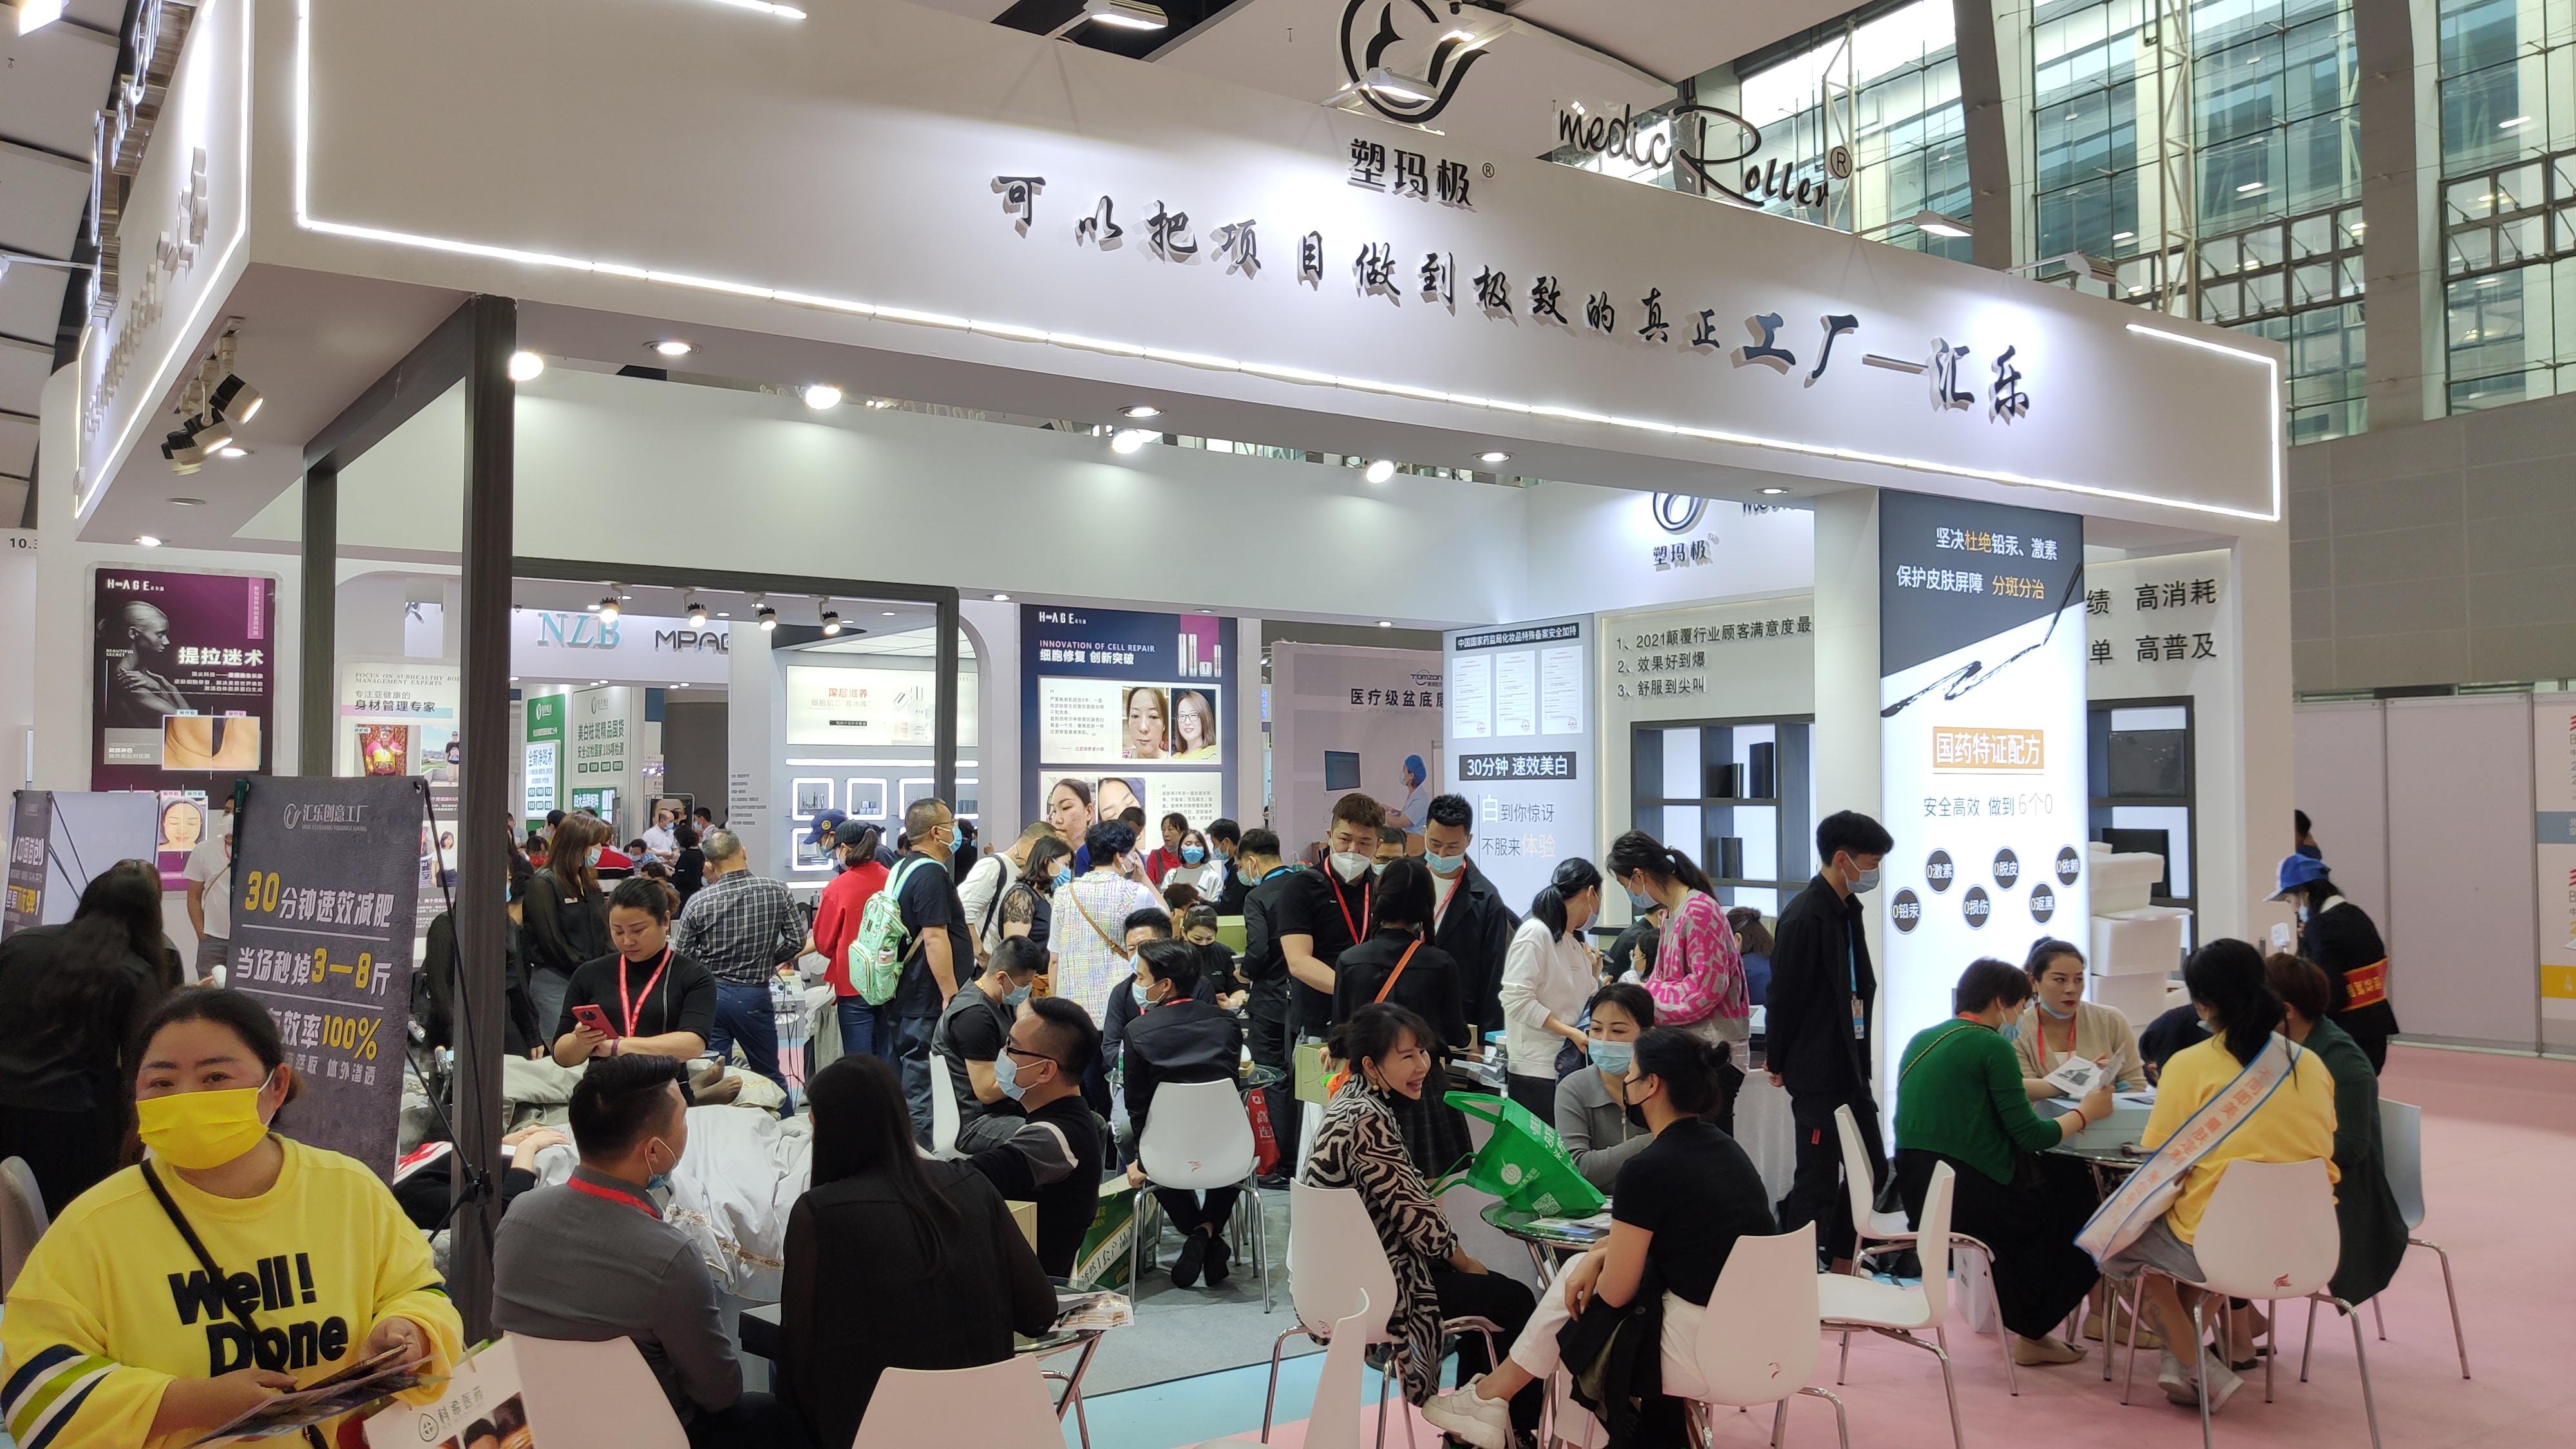 Huile took part in Guangzhou Meibo International Exhibition